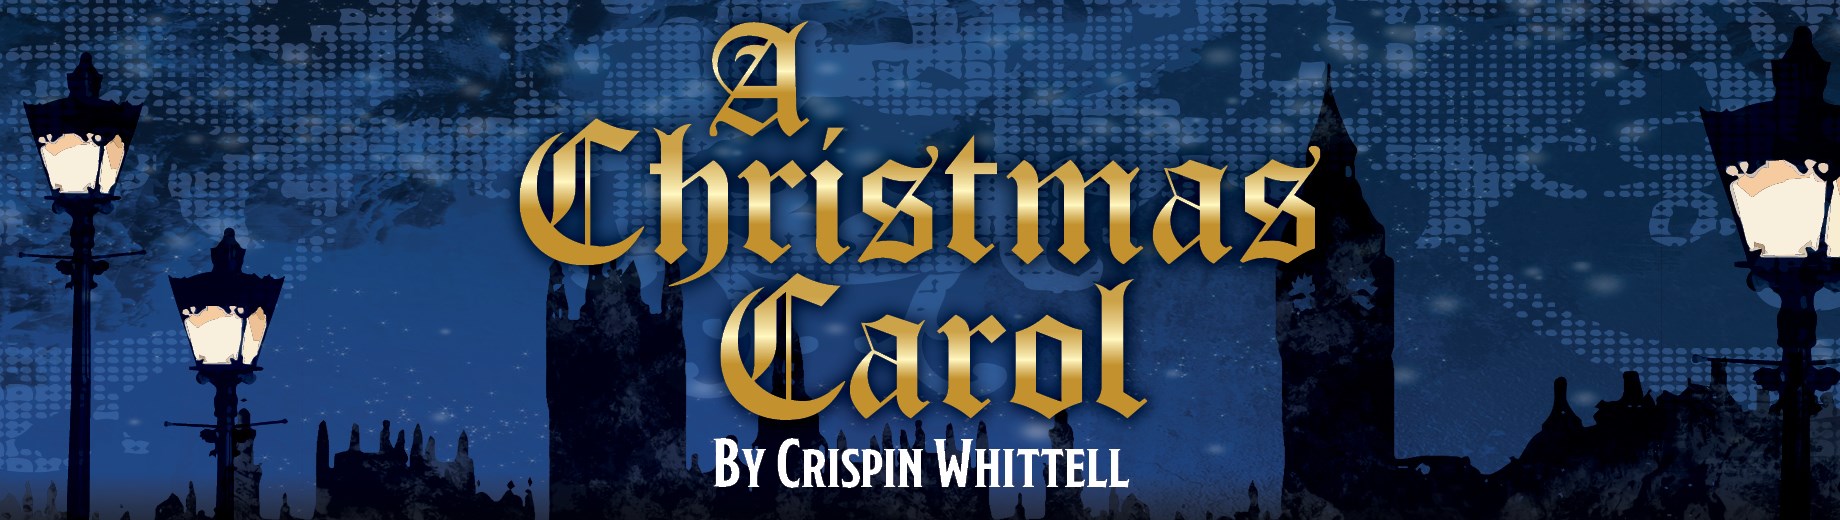 The Premiere Playhouse presents A Christmas Carol